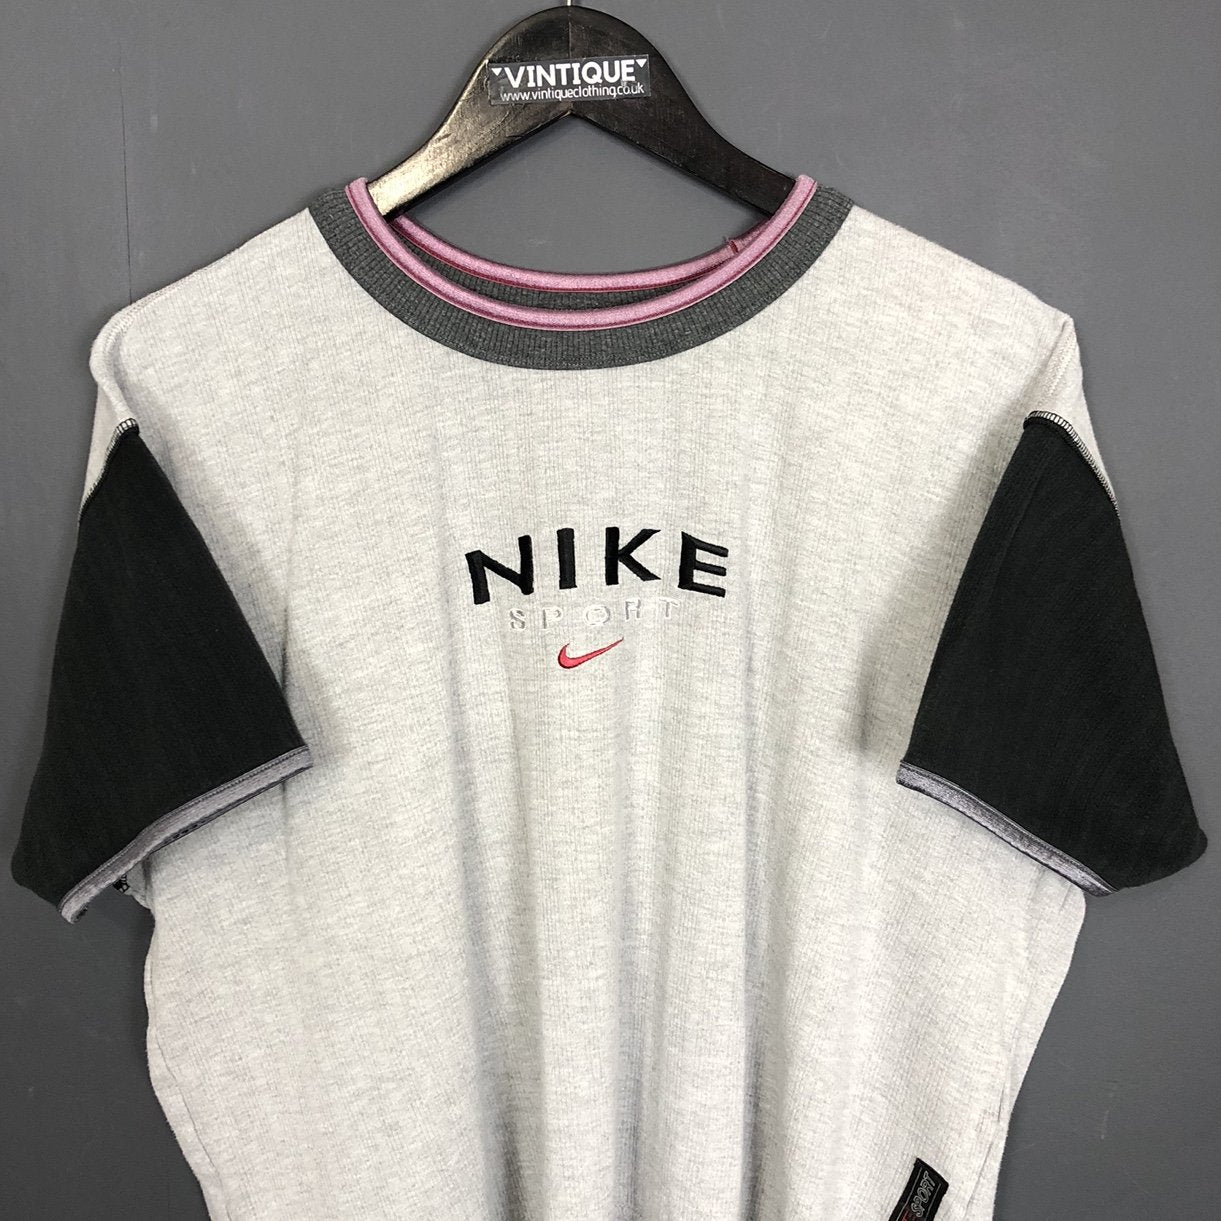 Vintage Nike Spellout T-Shirt in Grey, Black & Pink - Medium - Vintique Clothing